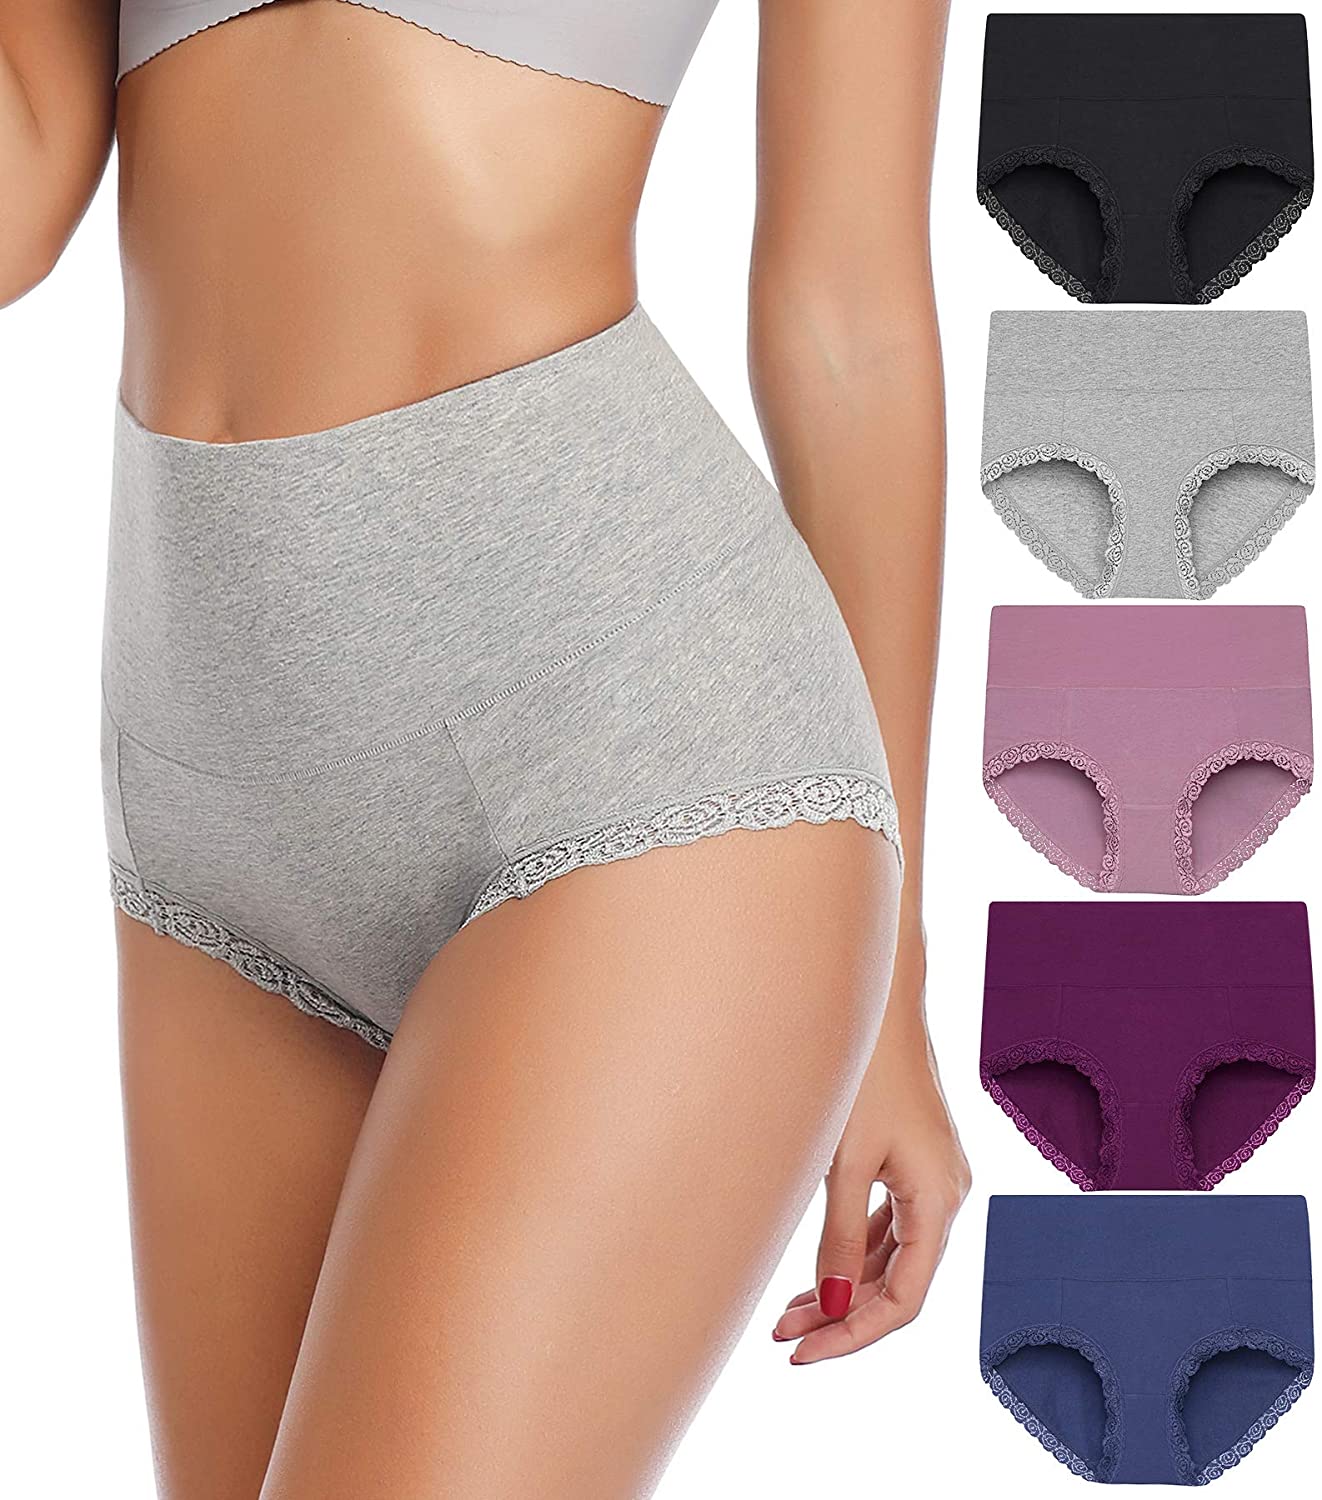 Womens Underwear No Muffin Top Full Coverage Cotton Underwear Briefs Soft Stretch Breathable Ladies Panties for Women 